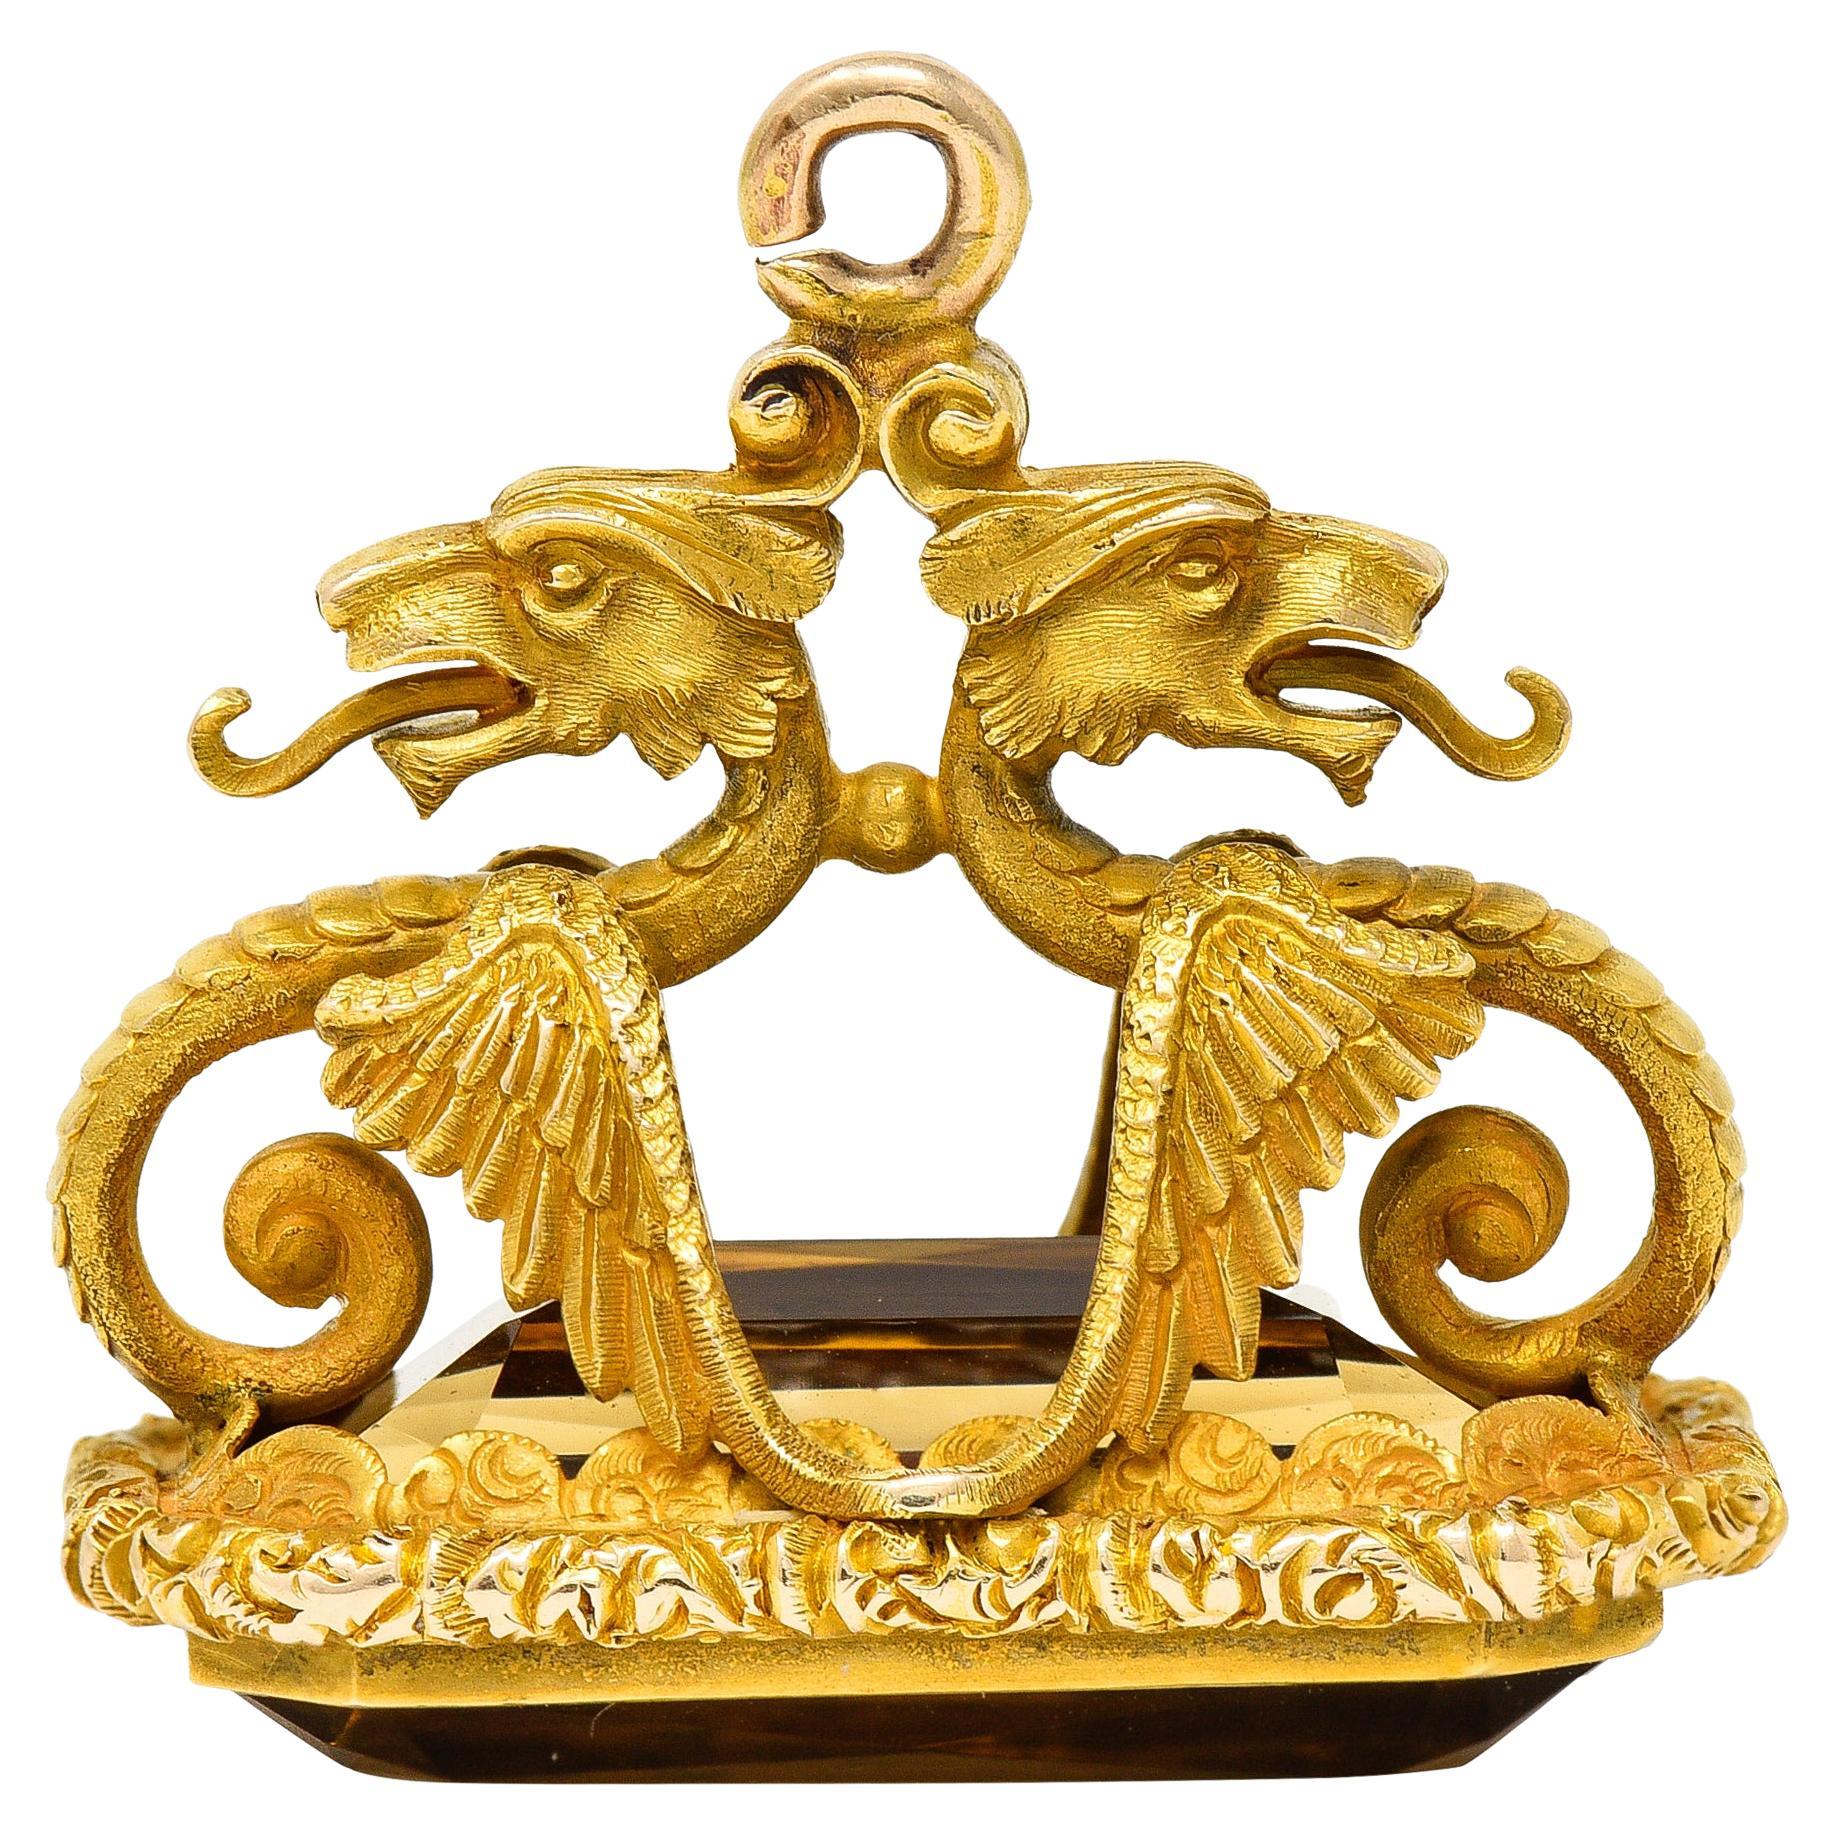 Art Nouveau Citrine 18 Karat Yellow Gold Serpent Dragon Fob Pendant Charm